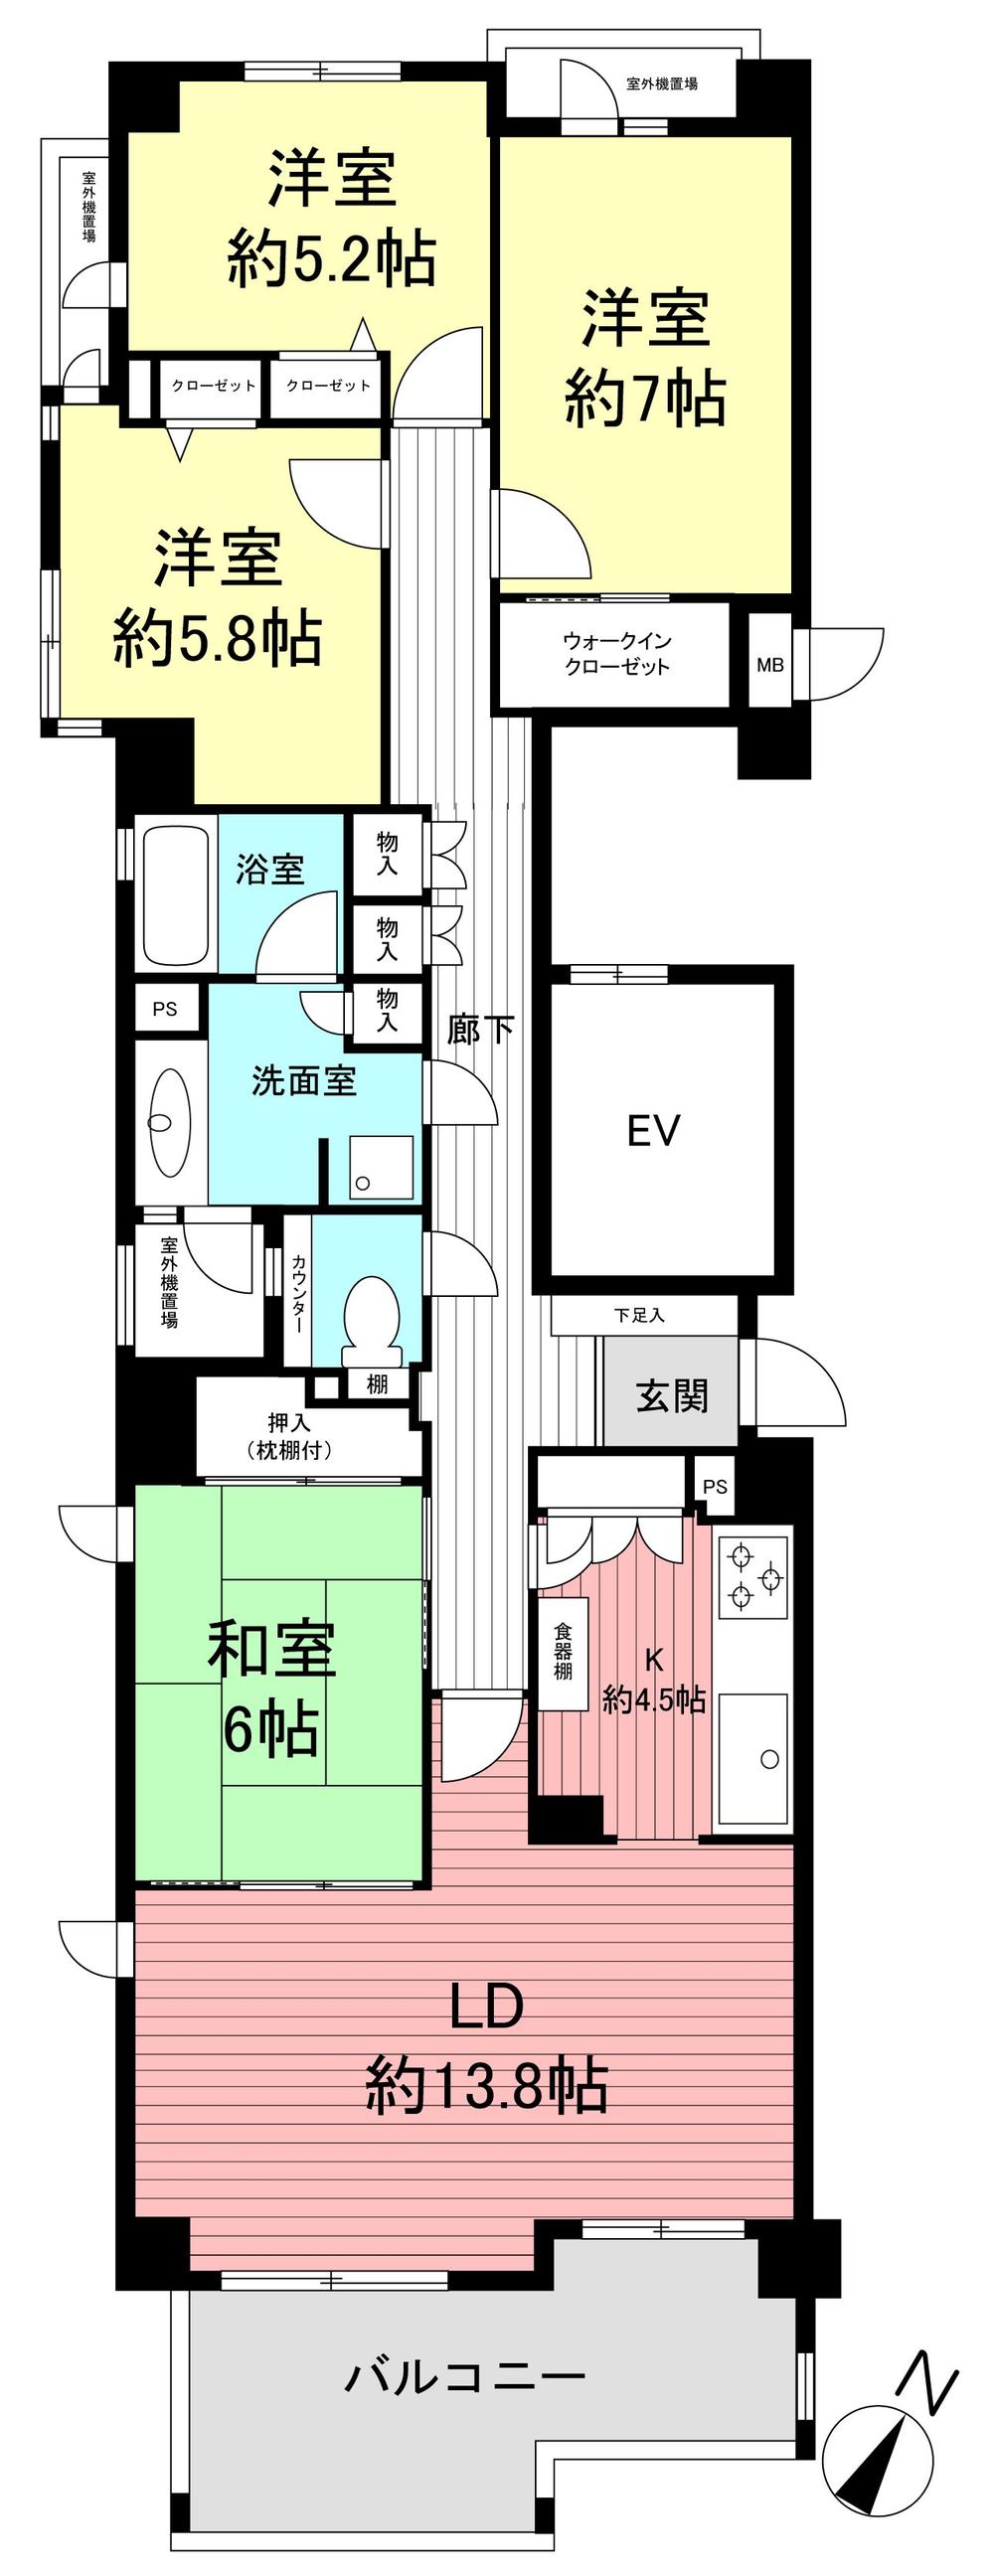 Floor plan. 4LDK, Price 41,800,000 yen, Footprint 102.15 sq m , Balcony area 11.9 sq m